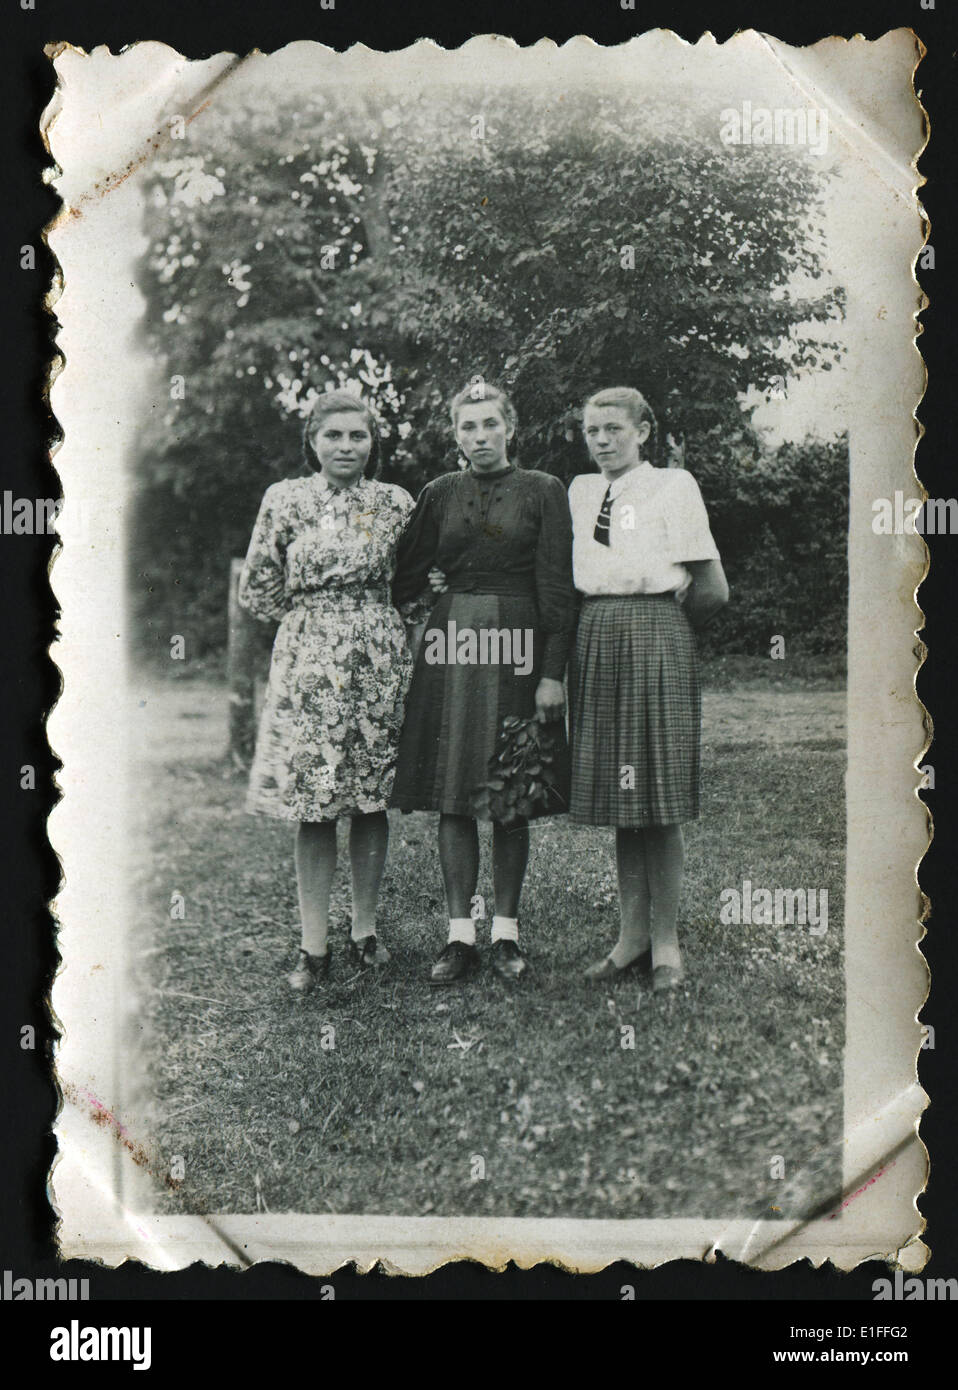 USSR - CIRCA 1950s: An antique photo shows three women in the garden Stock Photo